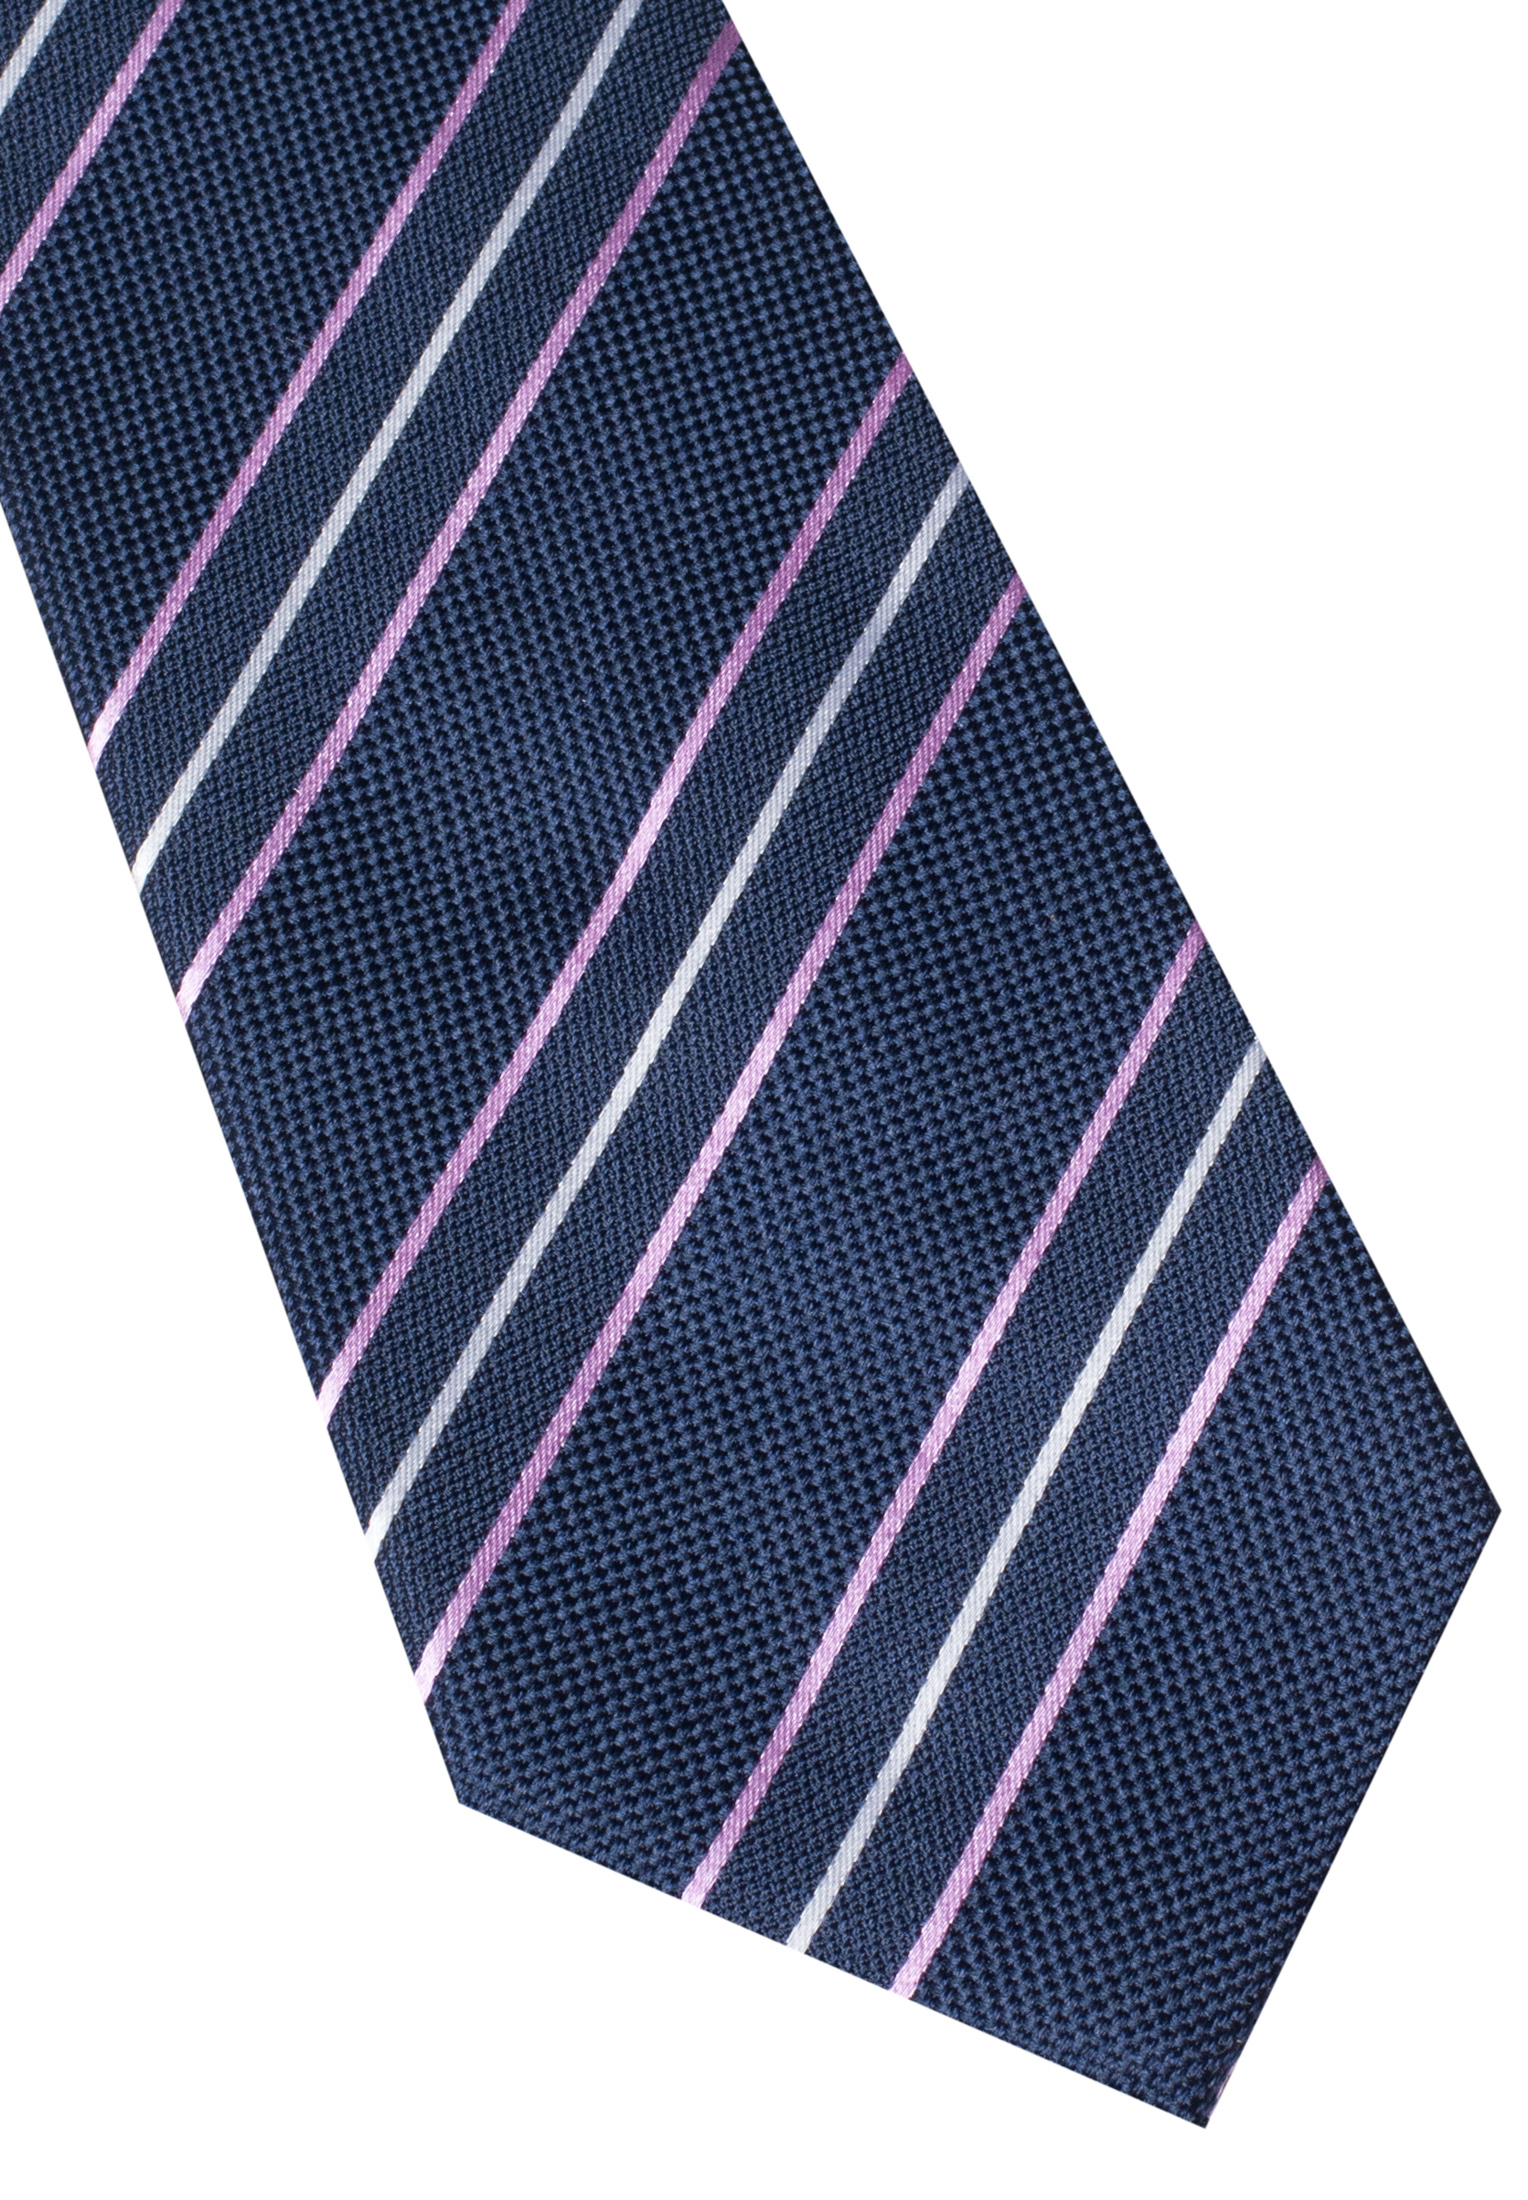 Cravate bleu marine/rose rayé